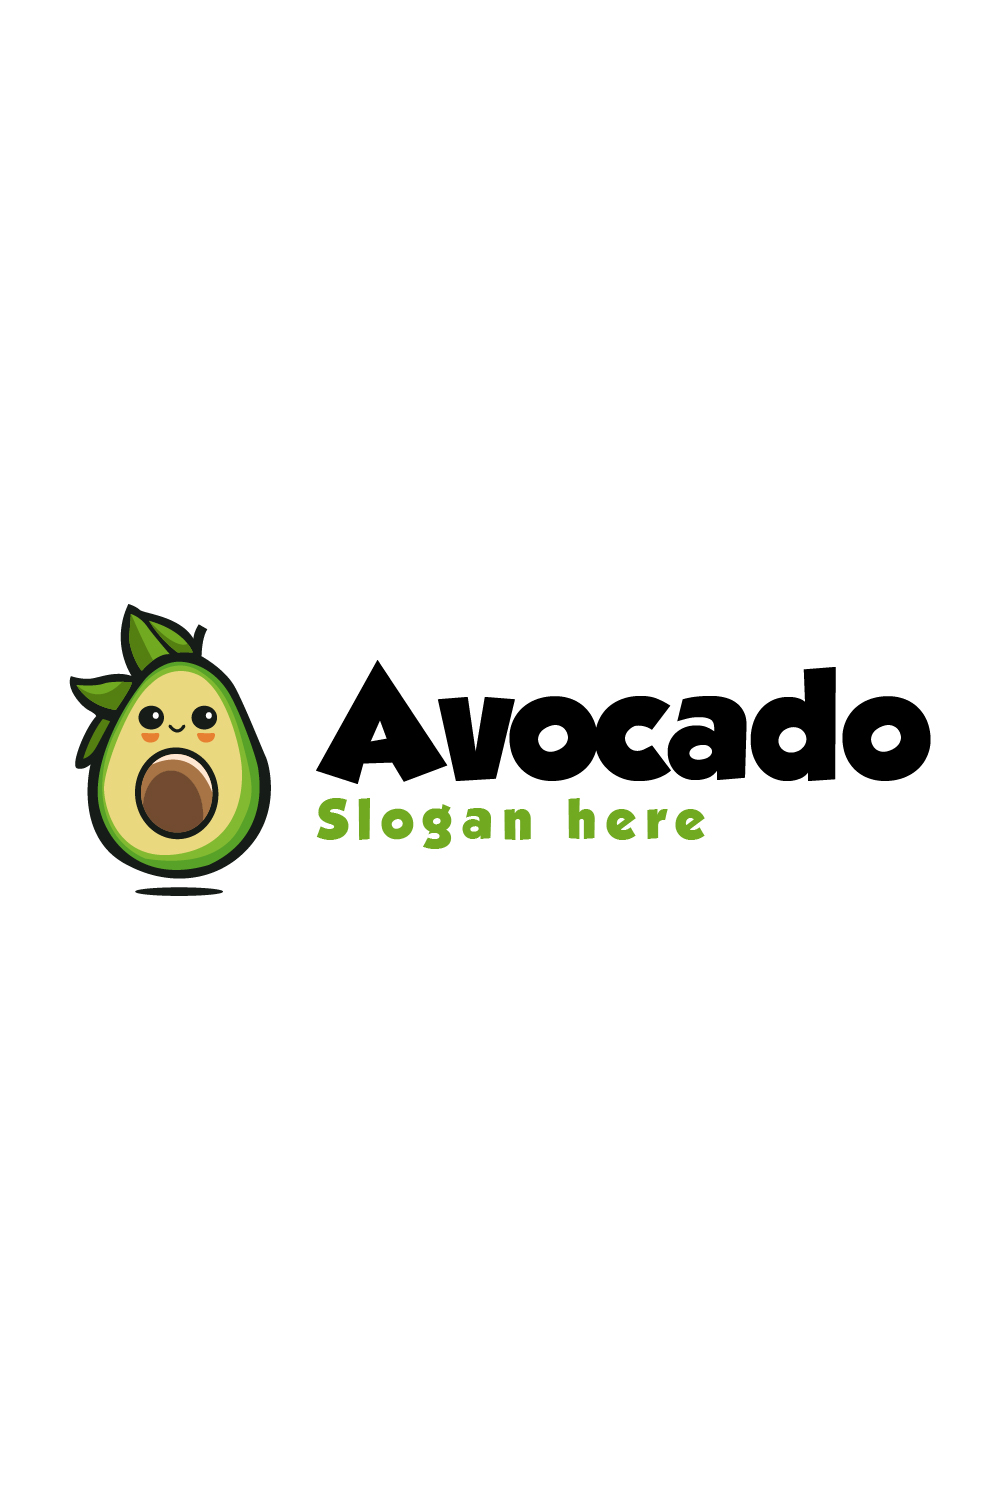 Cute Avocado Mascot logo Template pinterest preview image.